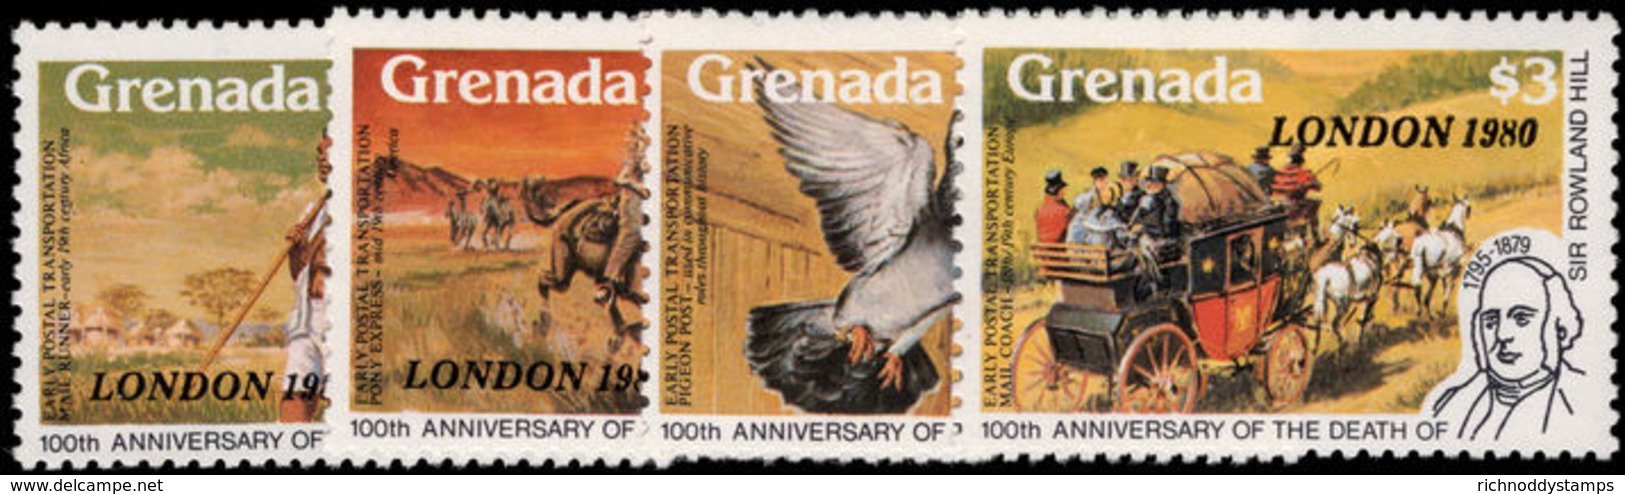 Grenada 1980 London 1980 Unmounted Mint. - Grenade (1974-...)